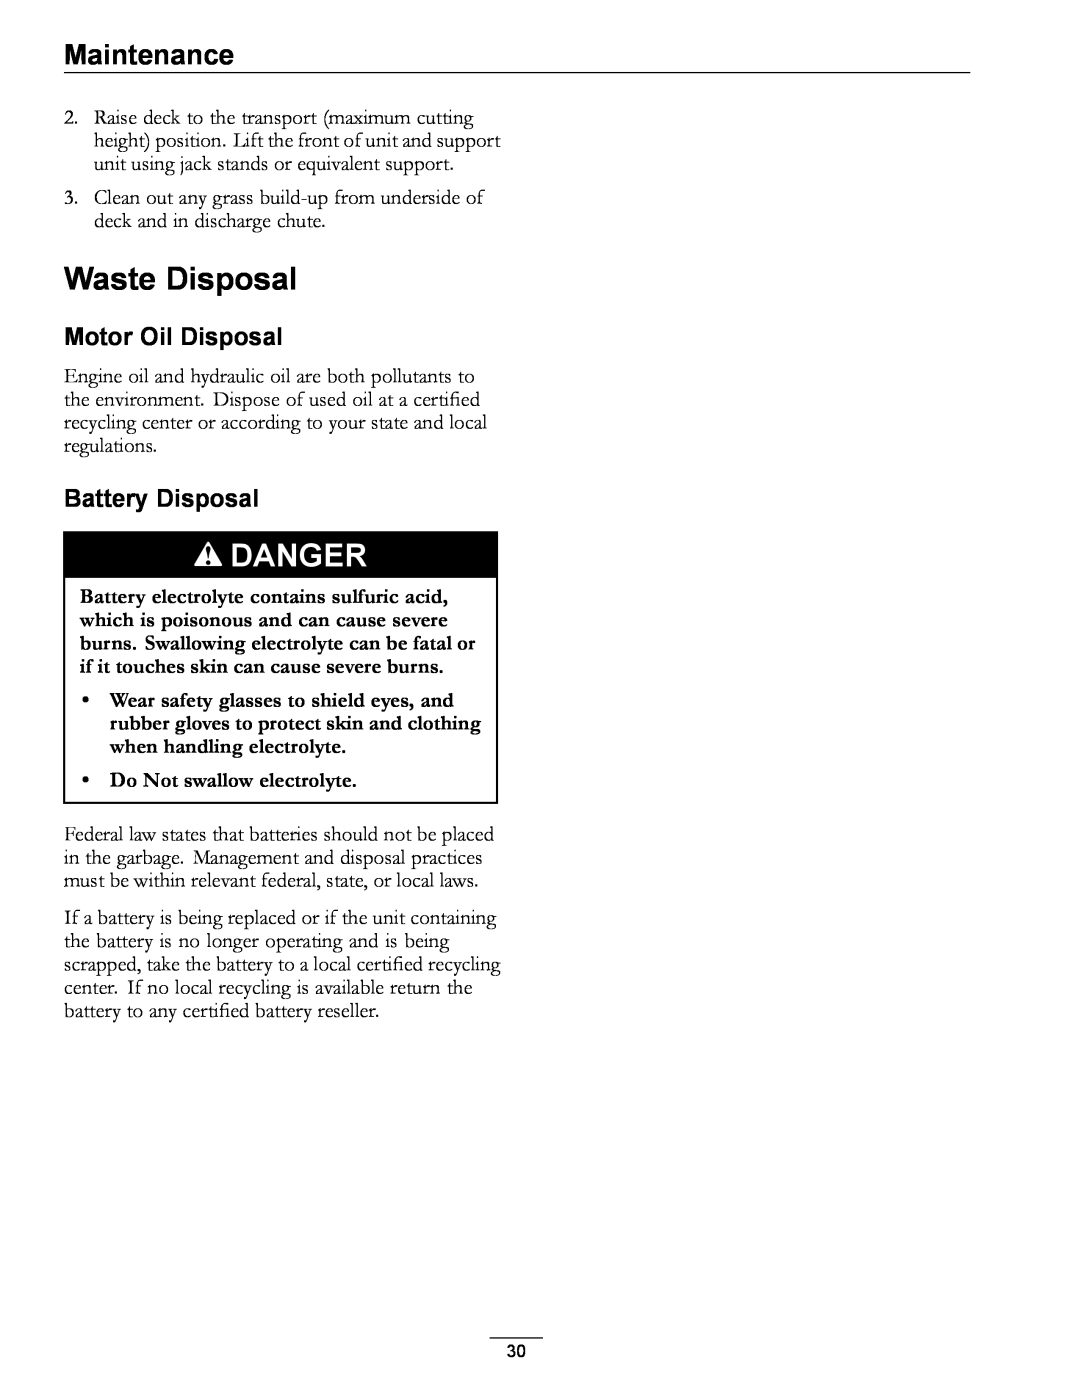 Exmark PHZ19KA343CA Waste Disposal, Motor Oil Disposal, Battery Disposal, Do Not swallow electrolyte, Danger, Maintenance 